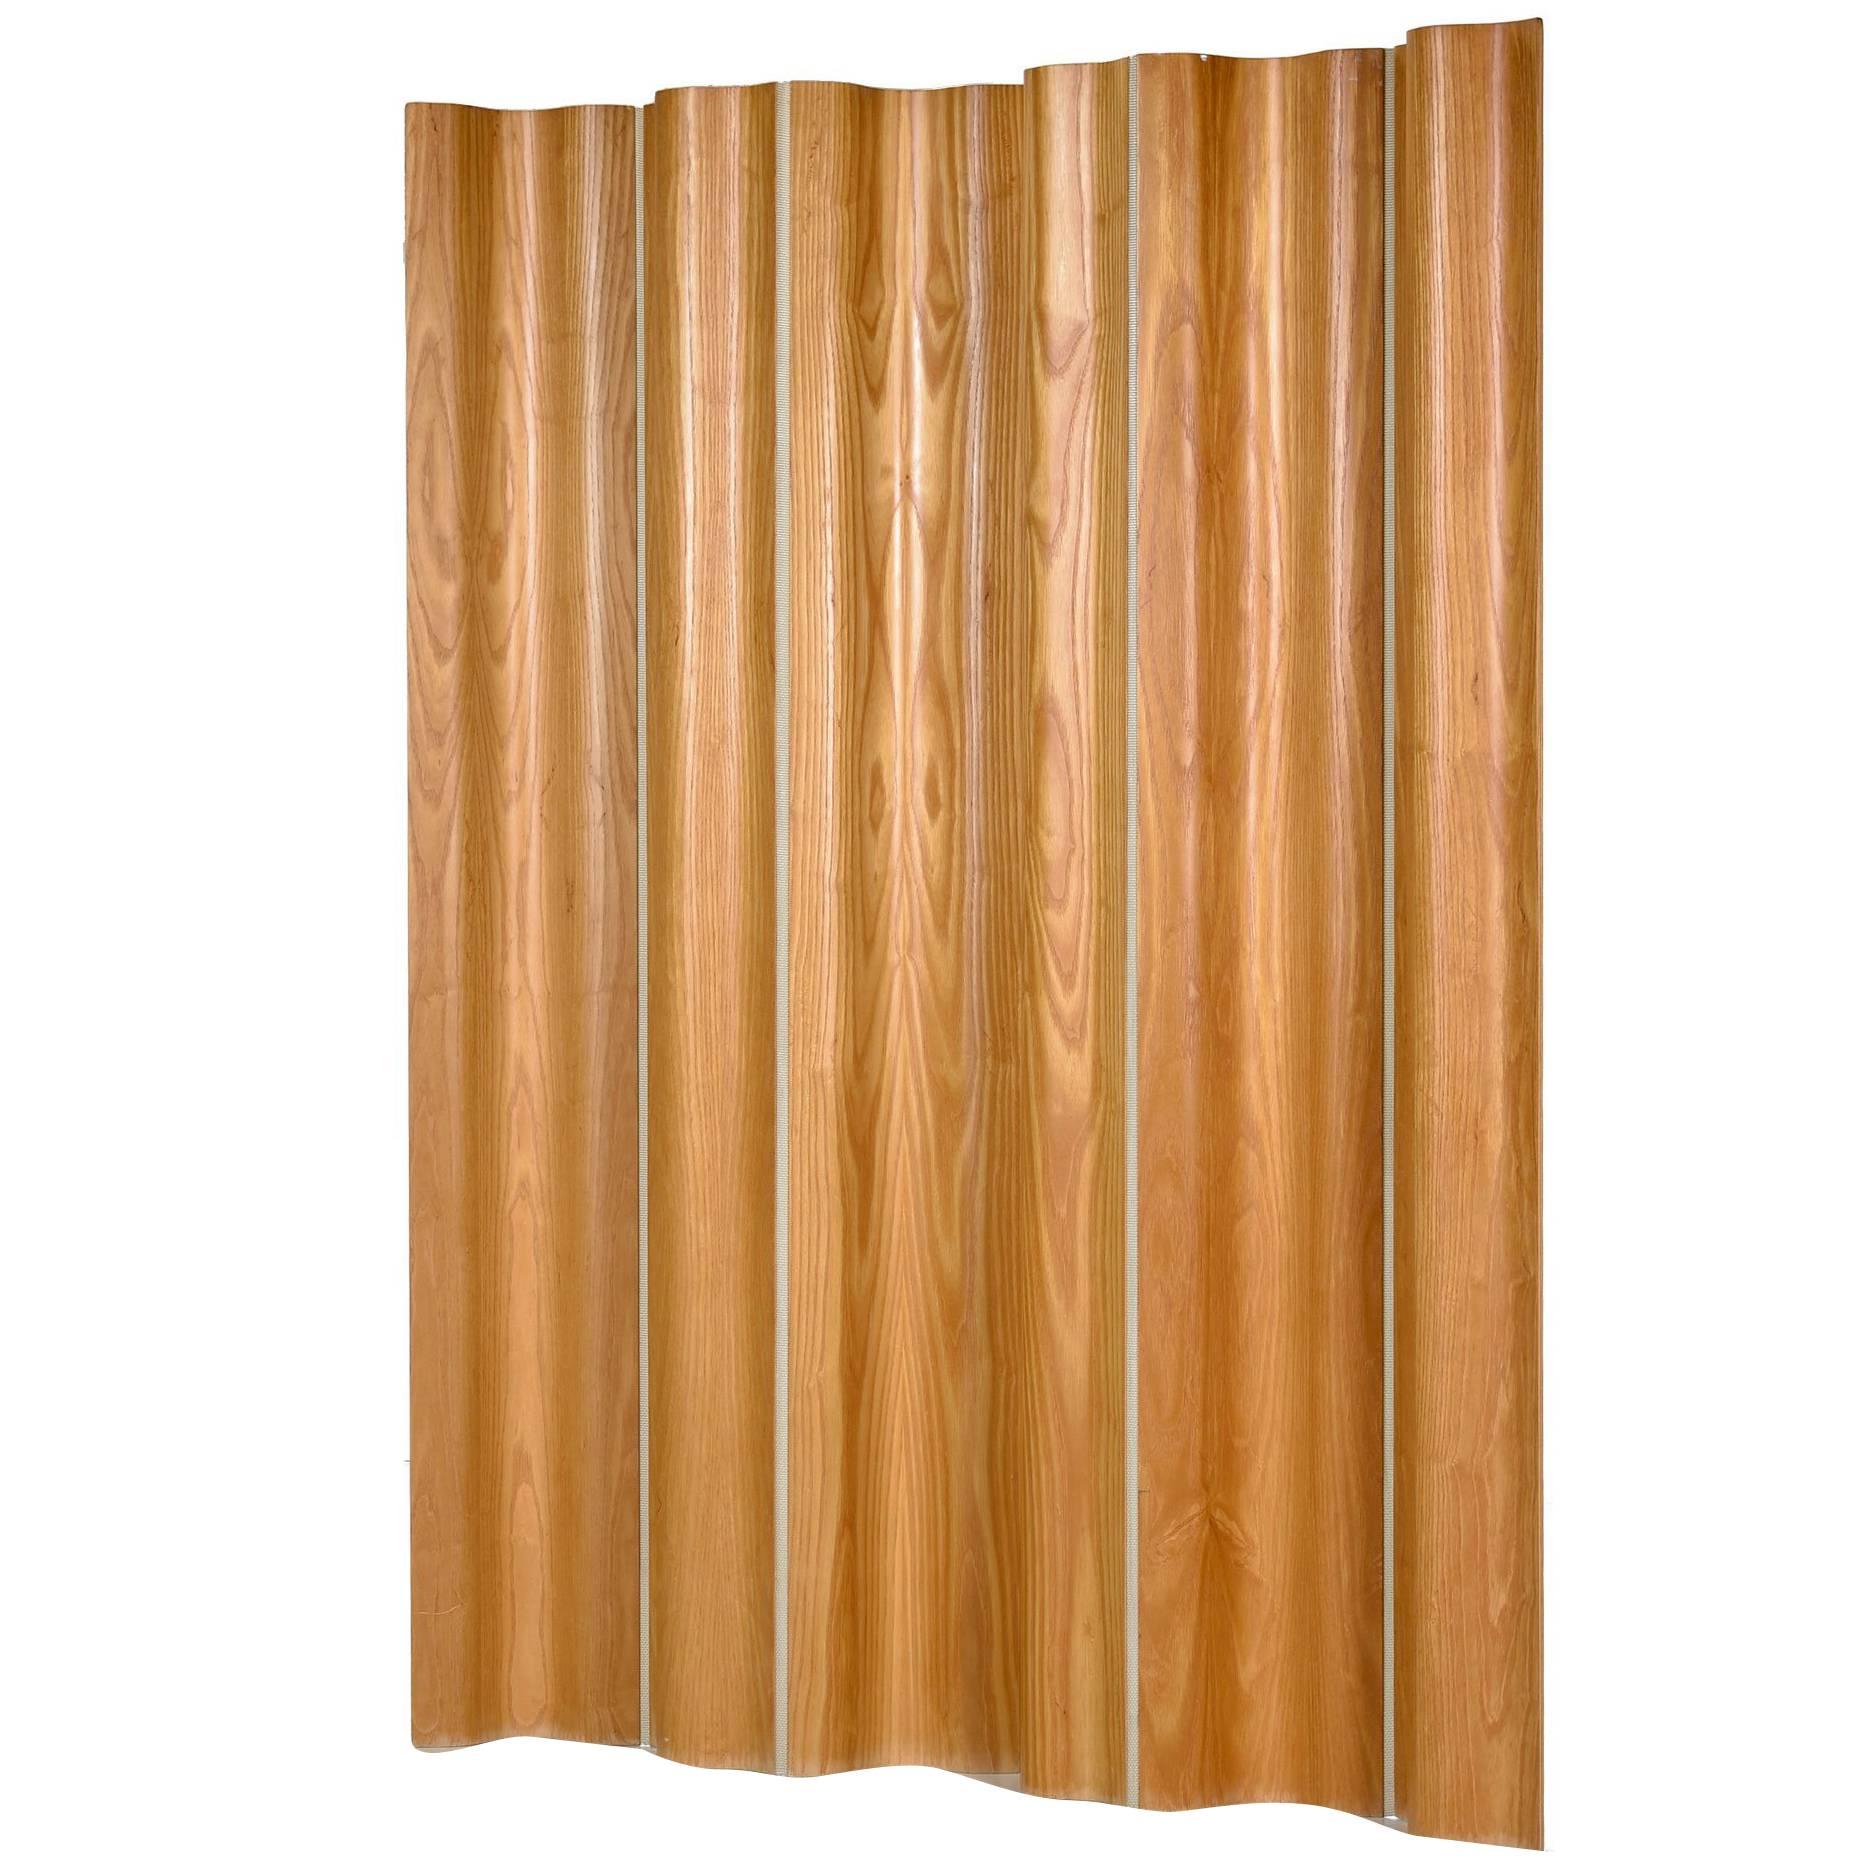 Eames Herman Miller FSW6 Molded Plywood Folding Screen